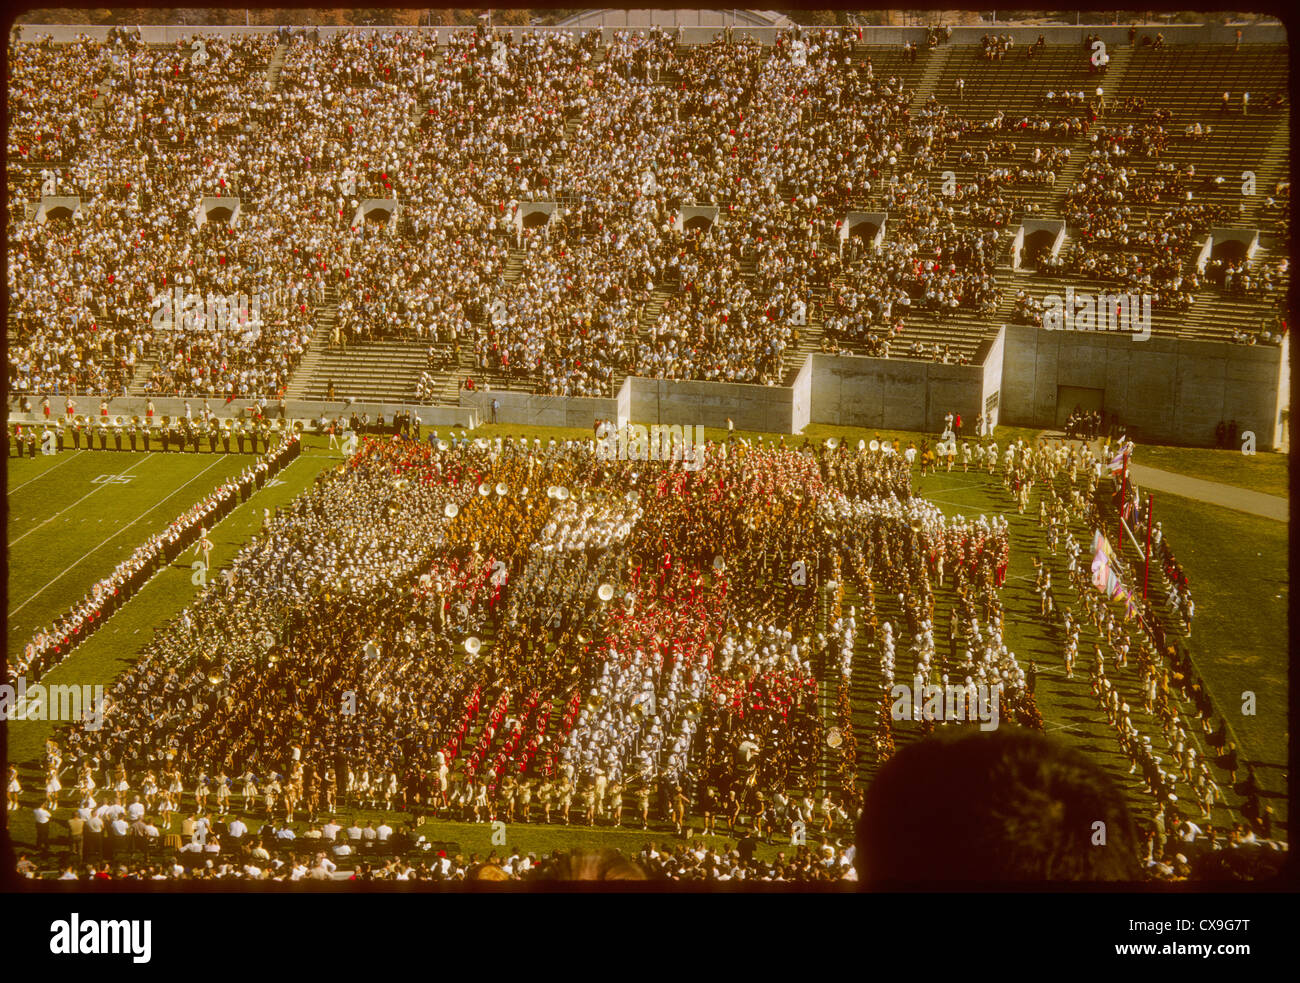 1960s 1965 Memorial Stadium IU Indiana University football game sports crowd bloomington indiana marching 100 Stock Photo